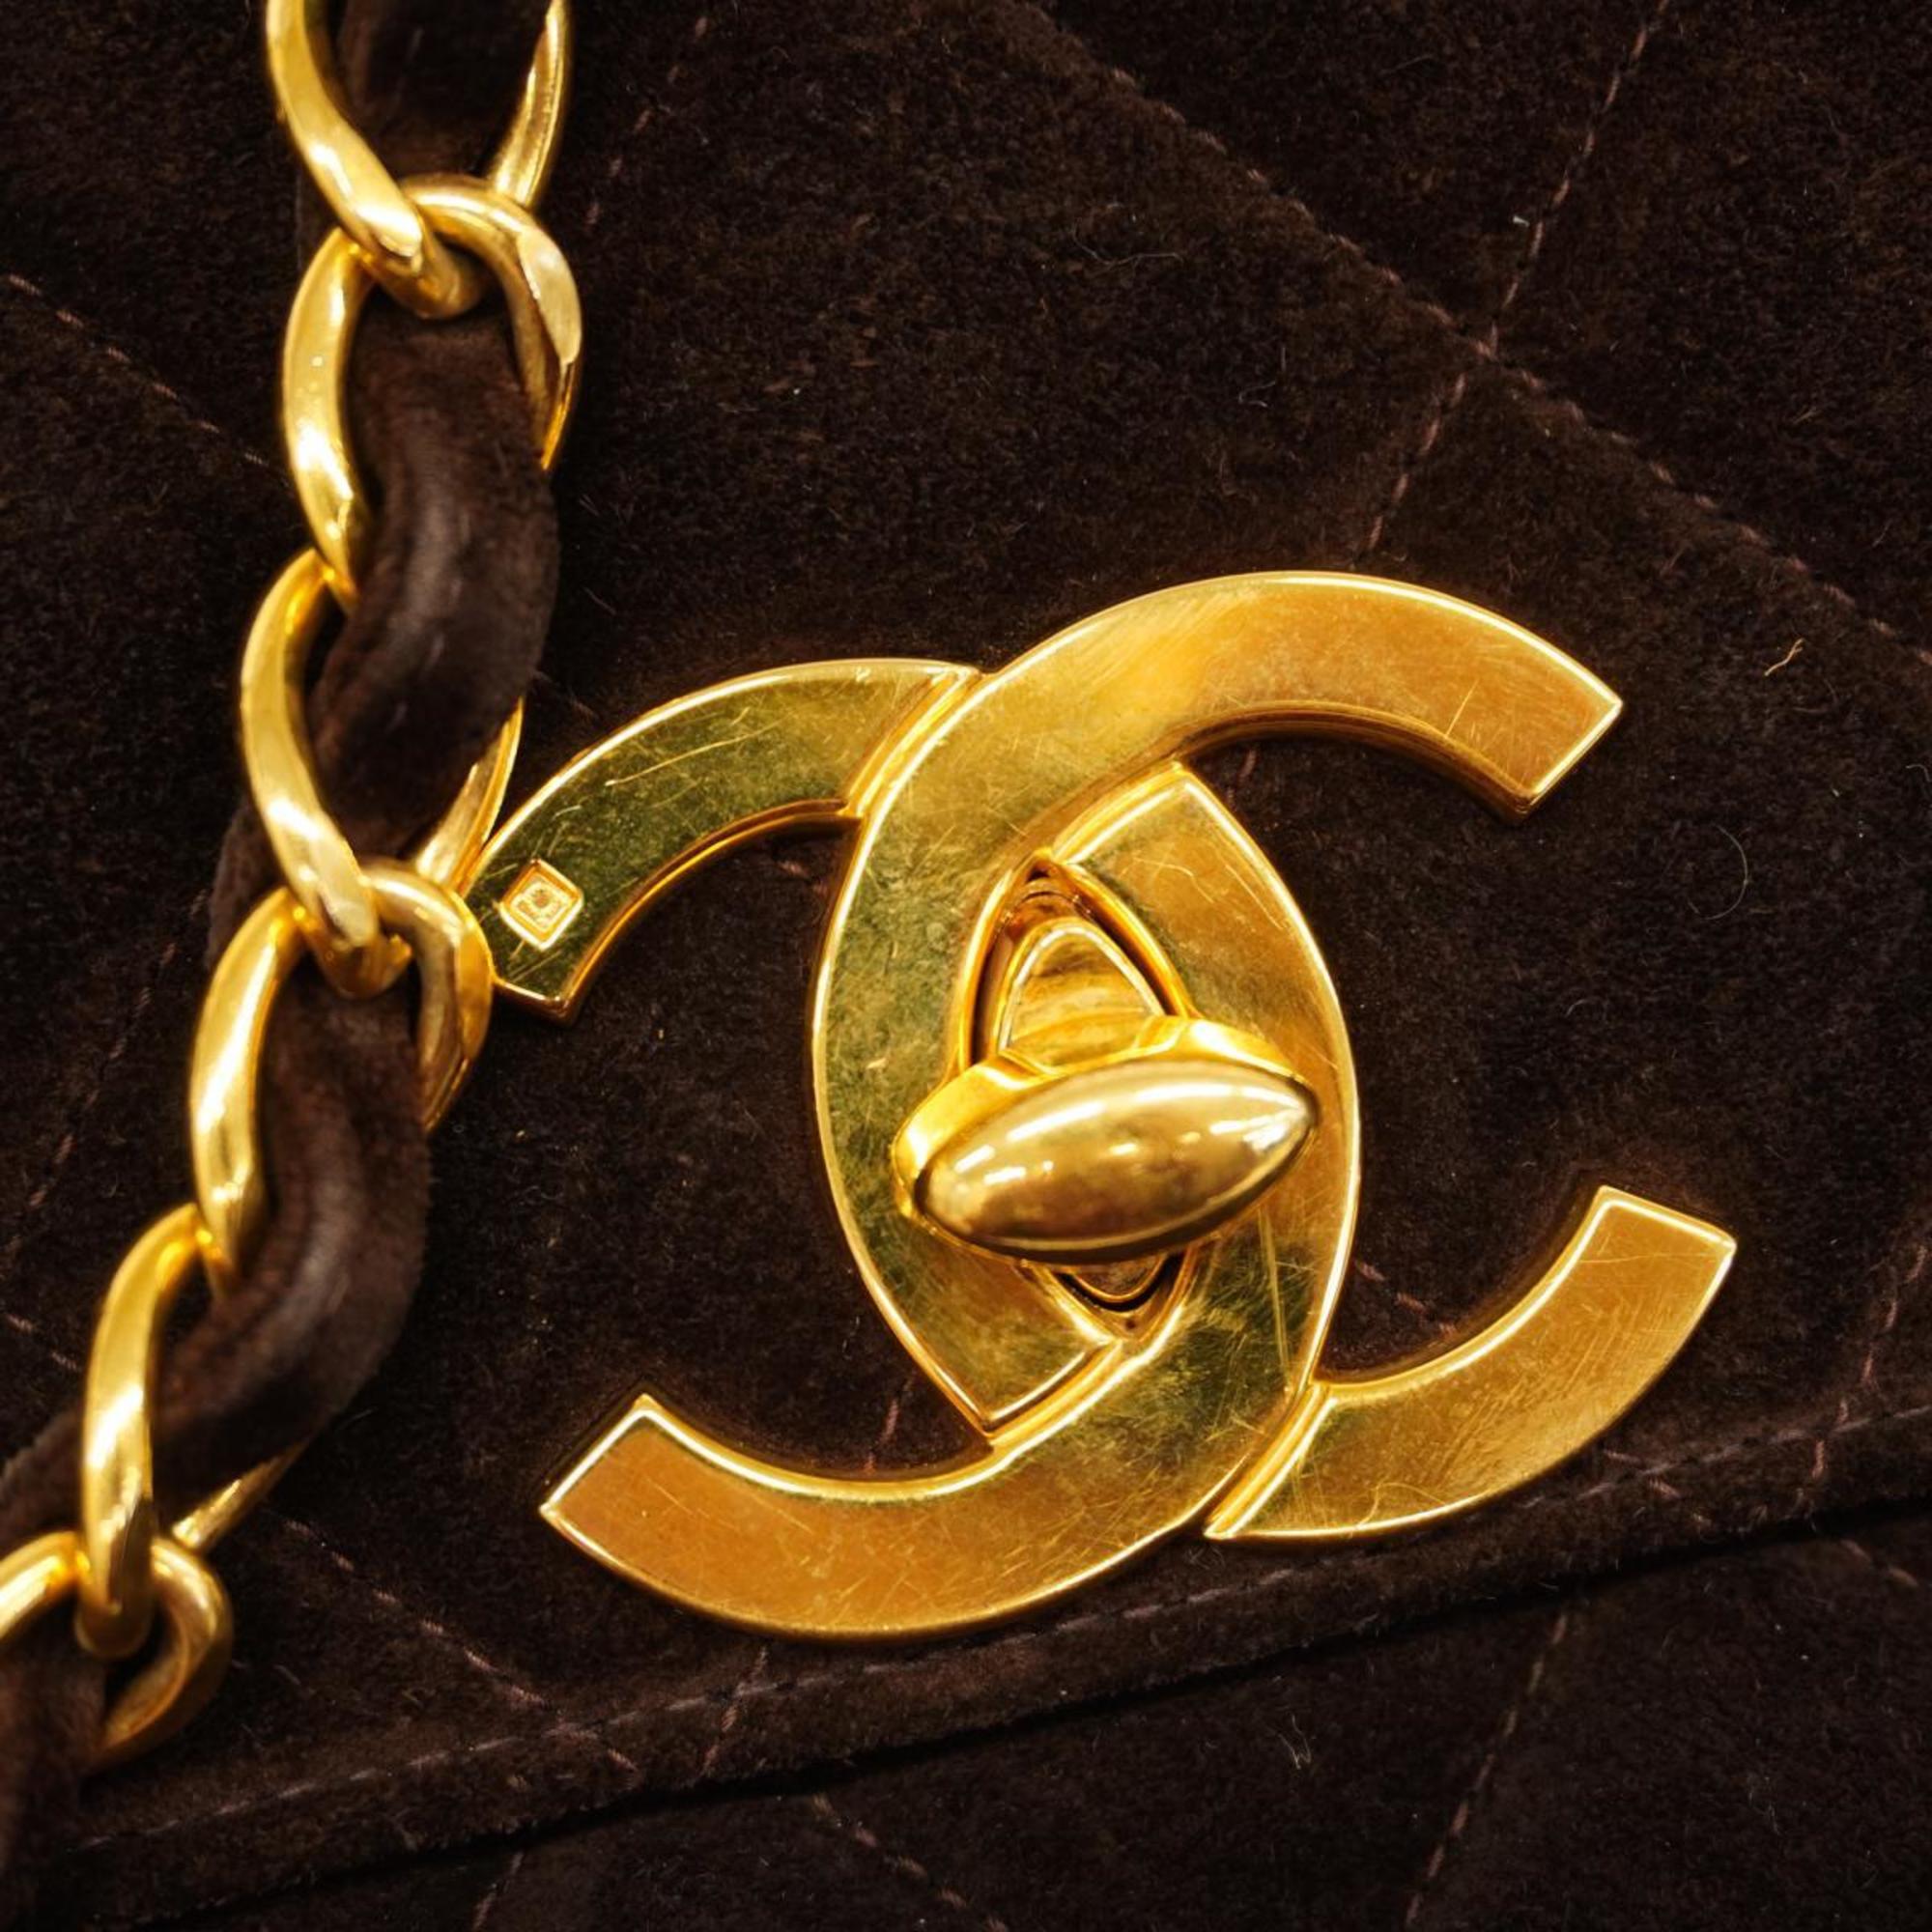 Chanel Shoulder Bag Matelasse Chain Suede Brown Women's